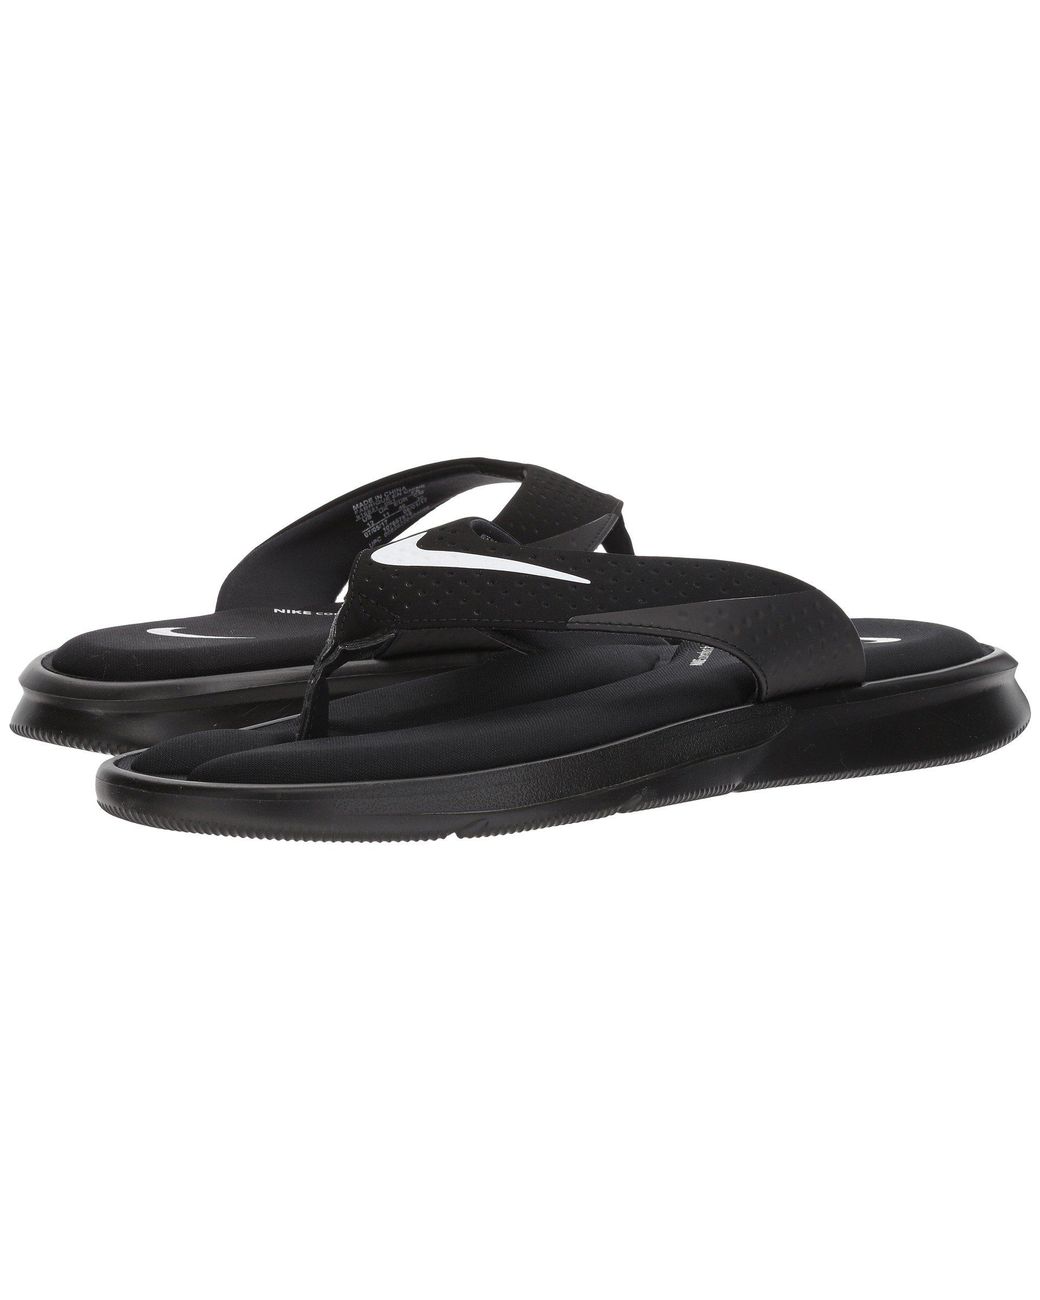 Nike Ultra Comfort Thong S 916831-001 in Black for Men